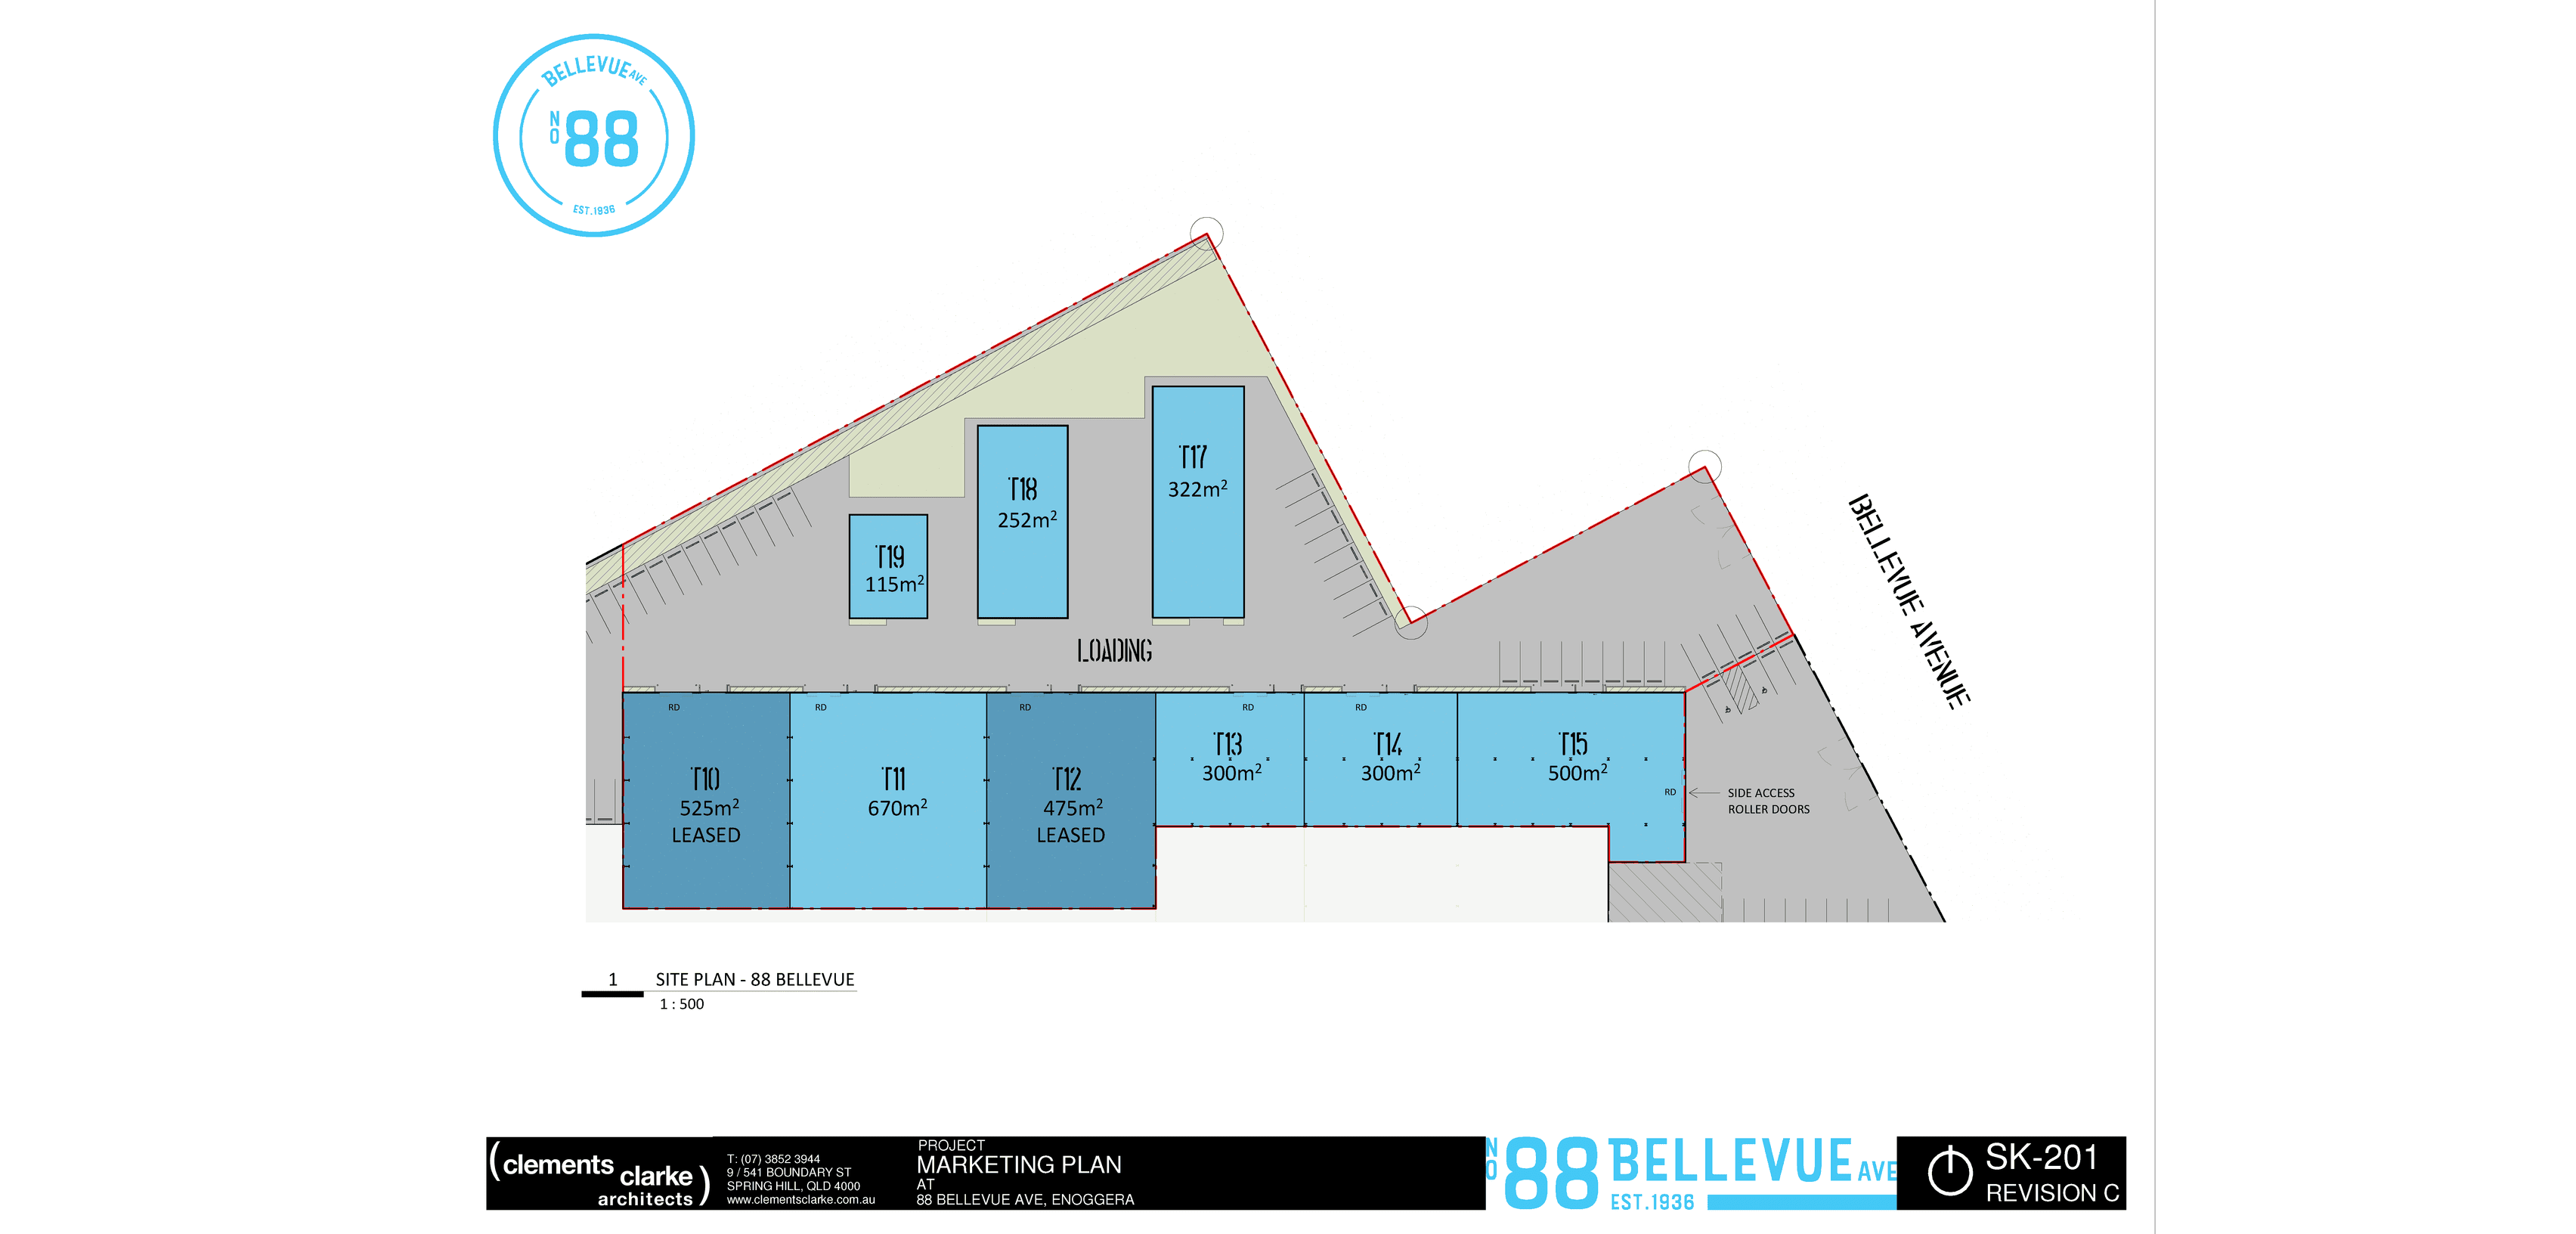 88 Bellevue ave floorplan0